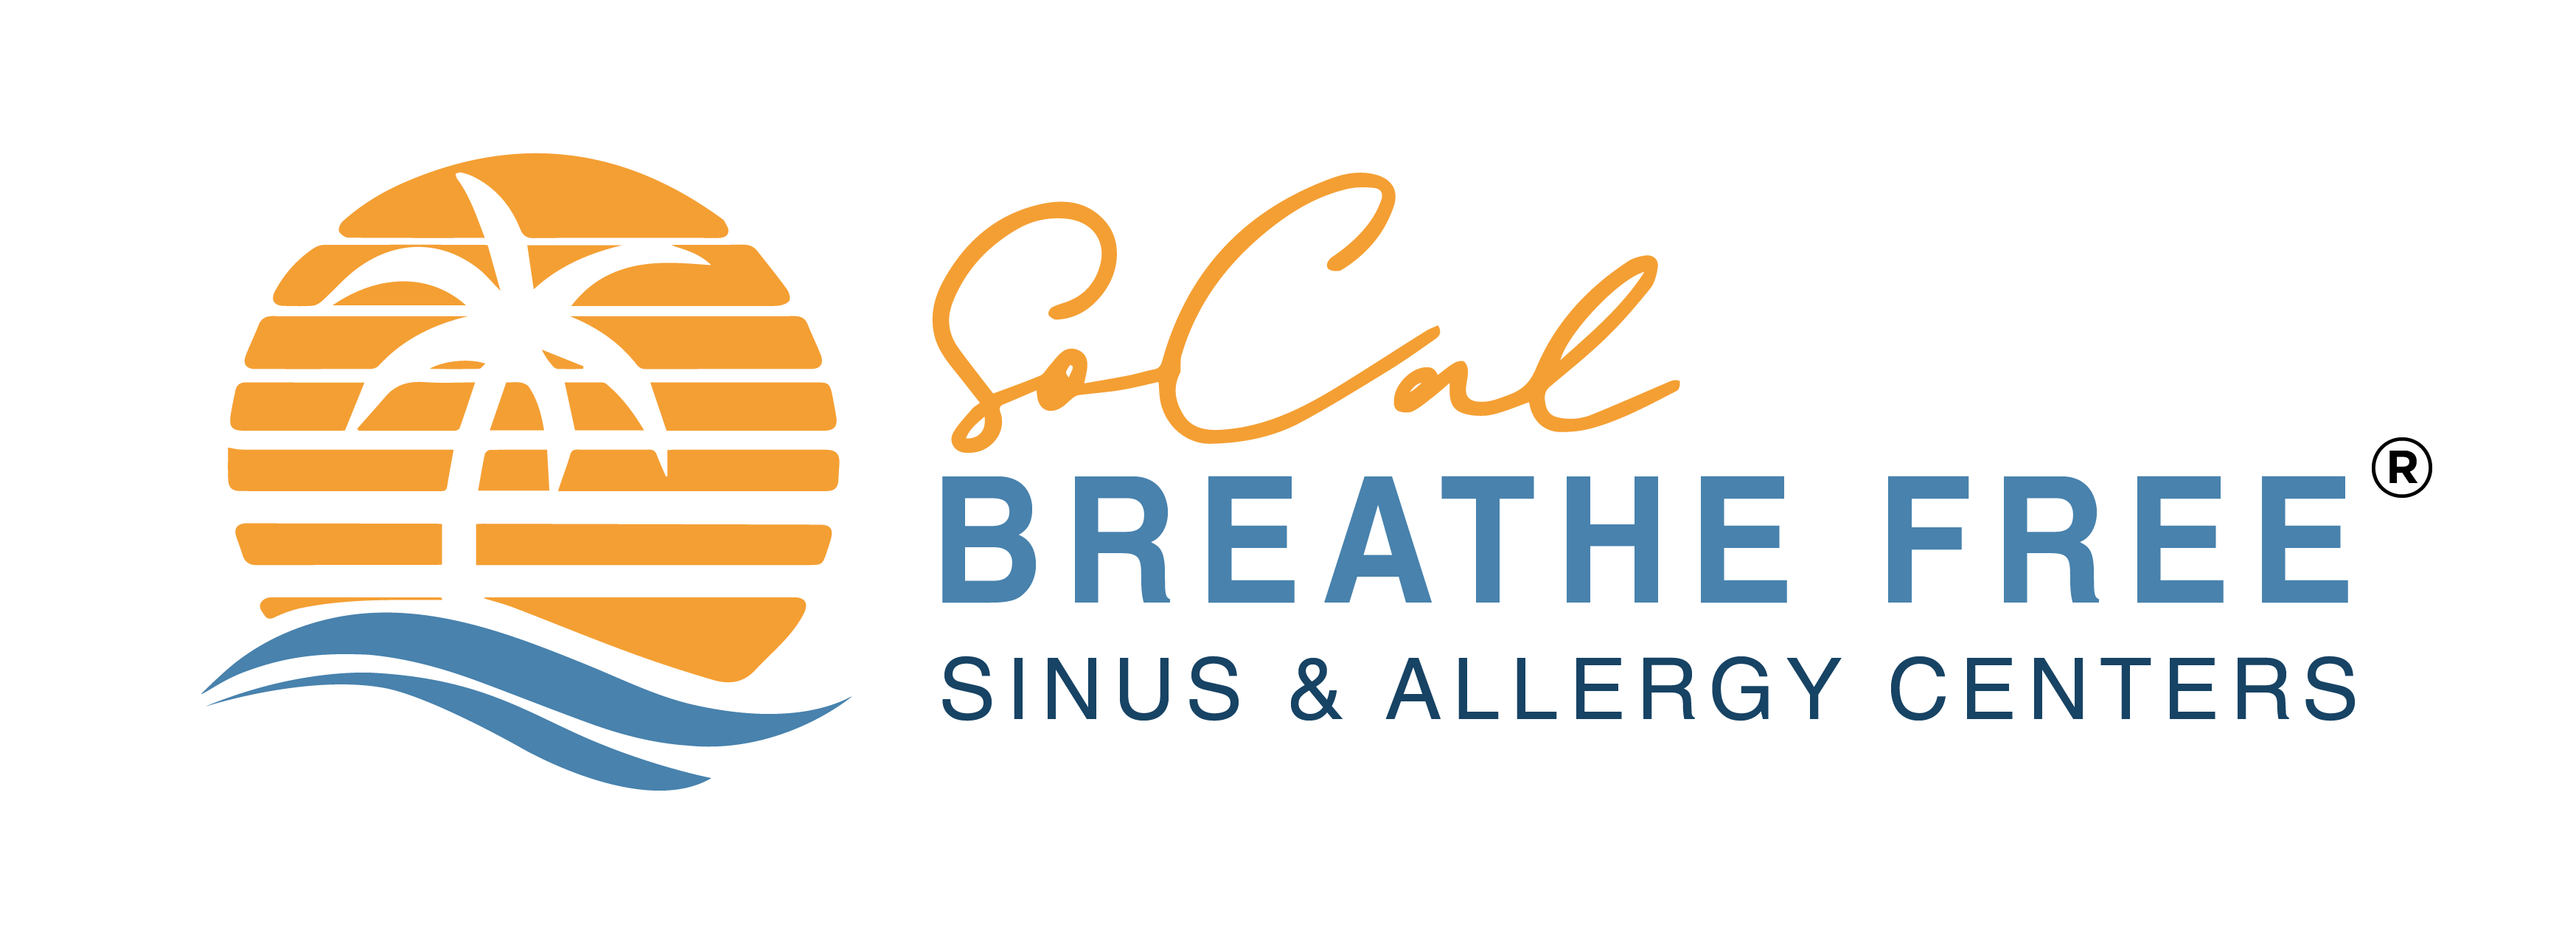 SoCal Breathe Free Sinus & Allergy Centers Logo